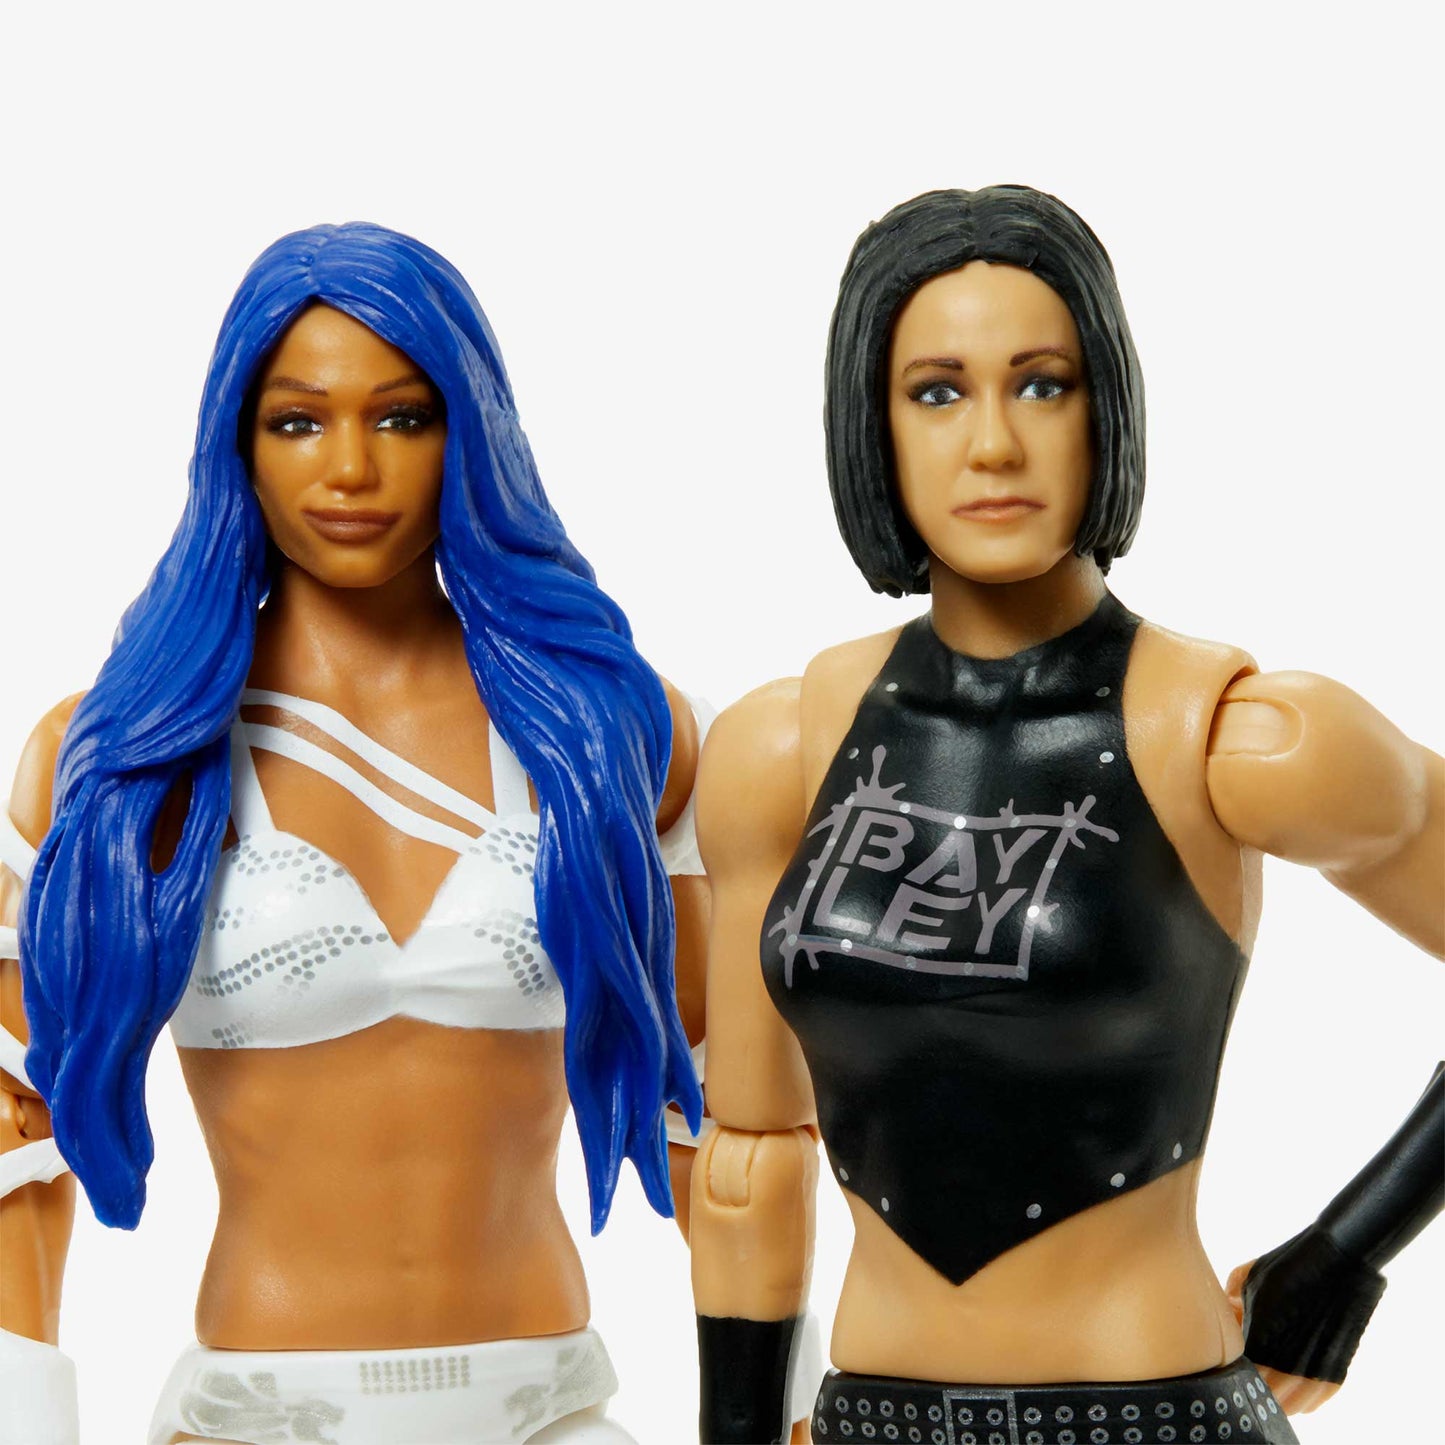 Bayley & Sasha Banks - WWE Championship Showdown 2-Pack Series #9